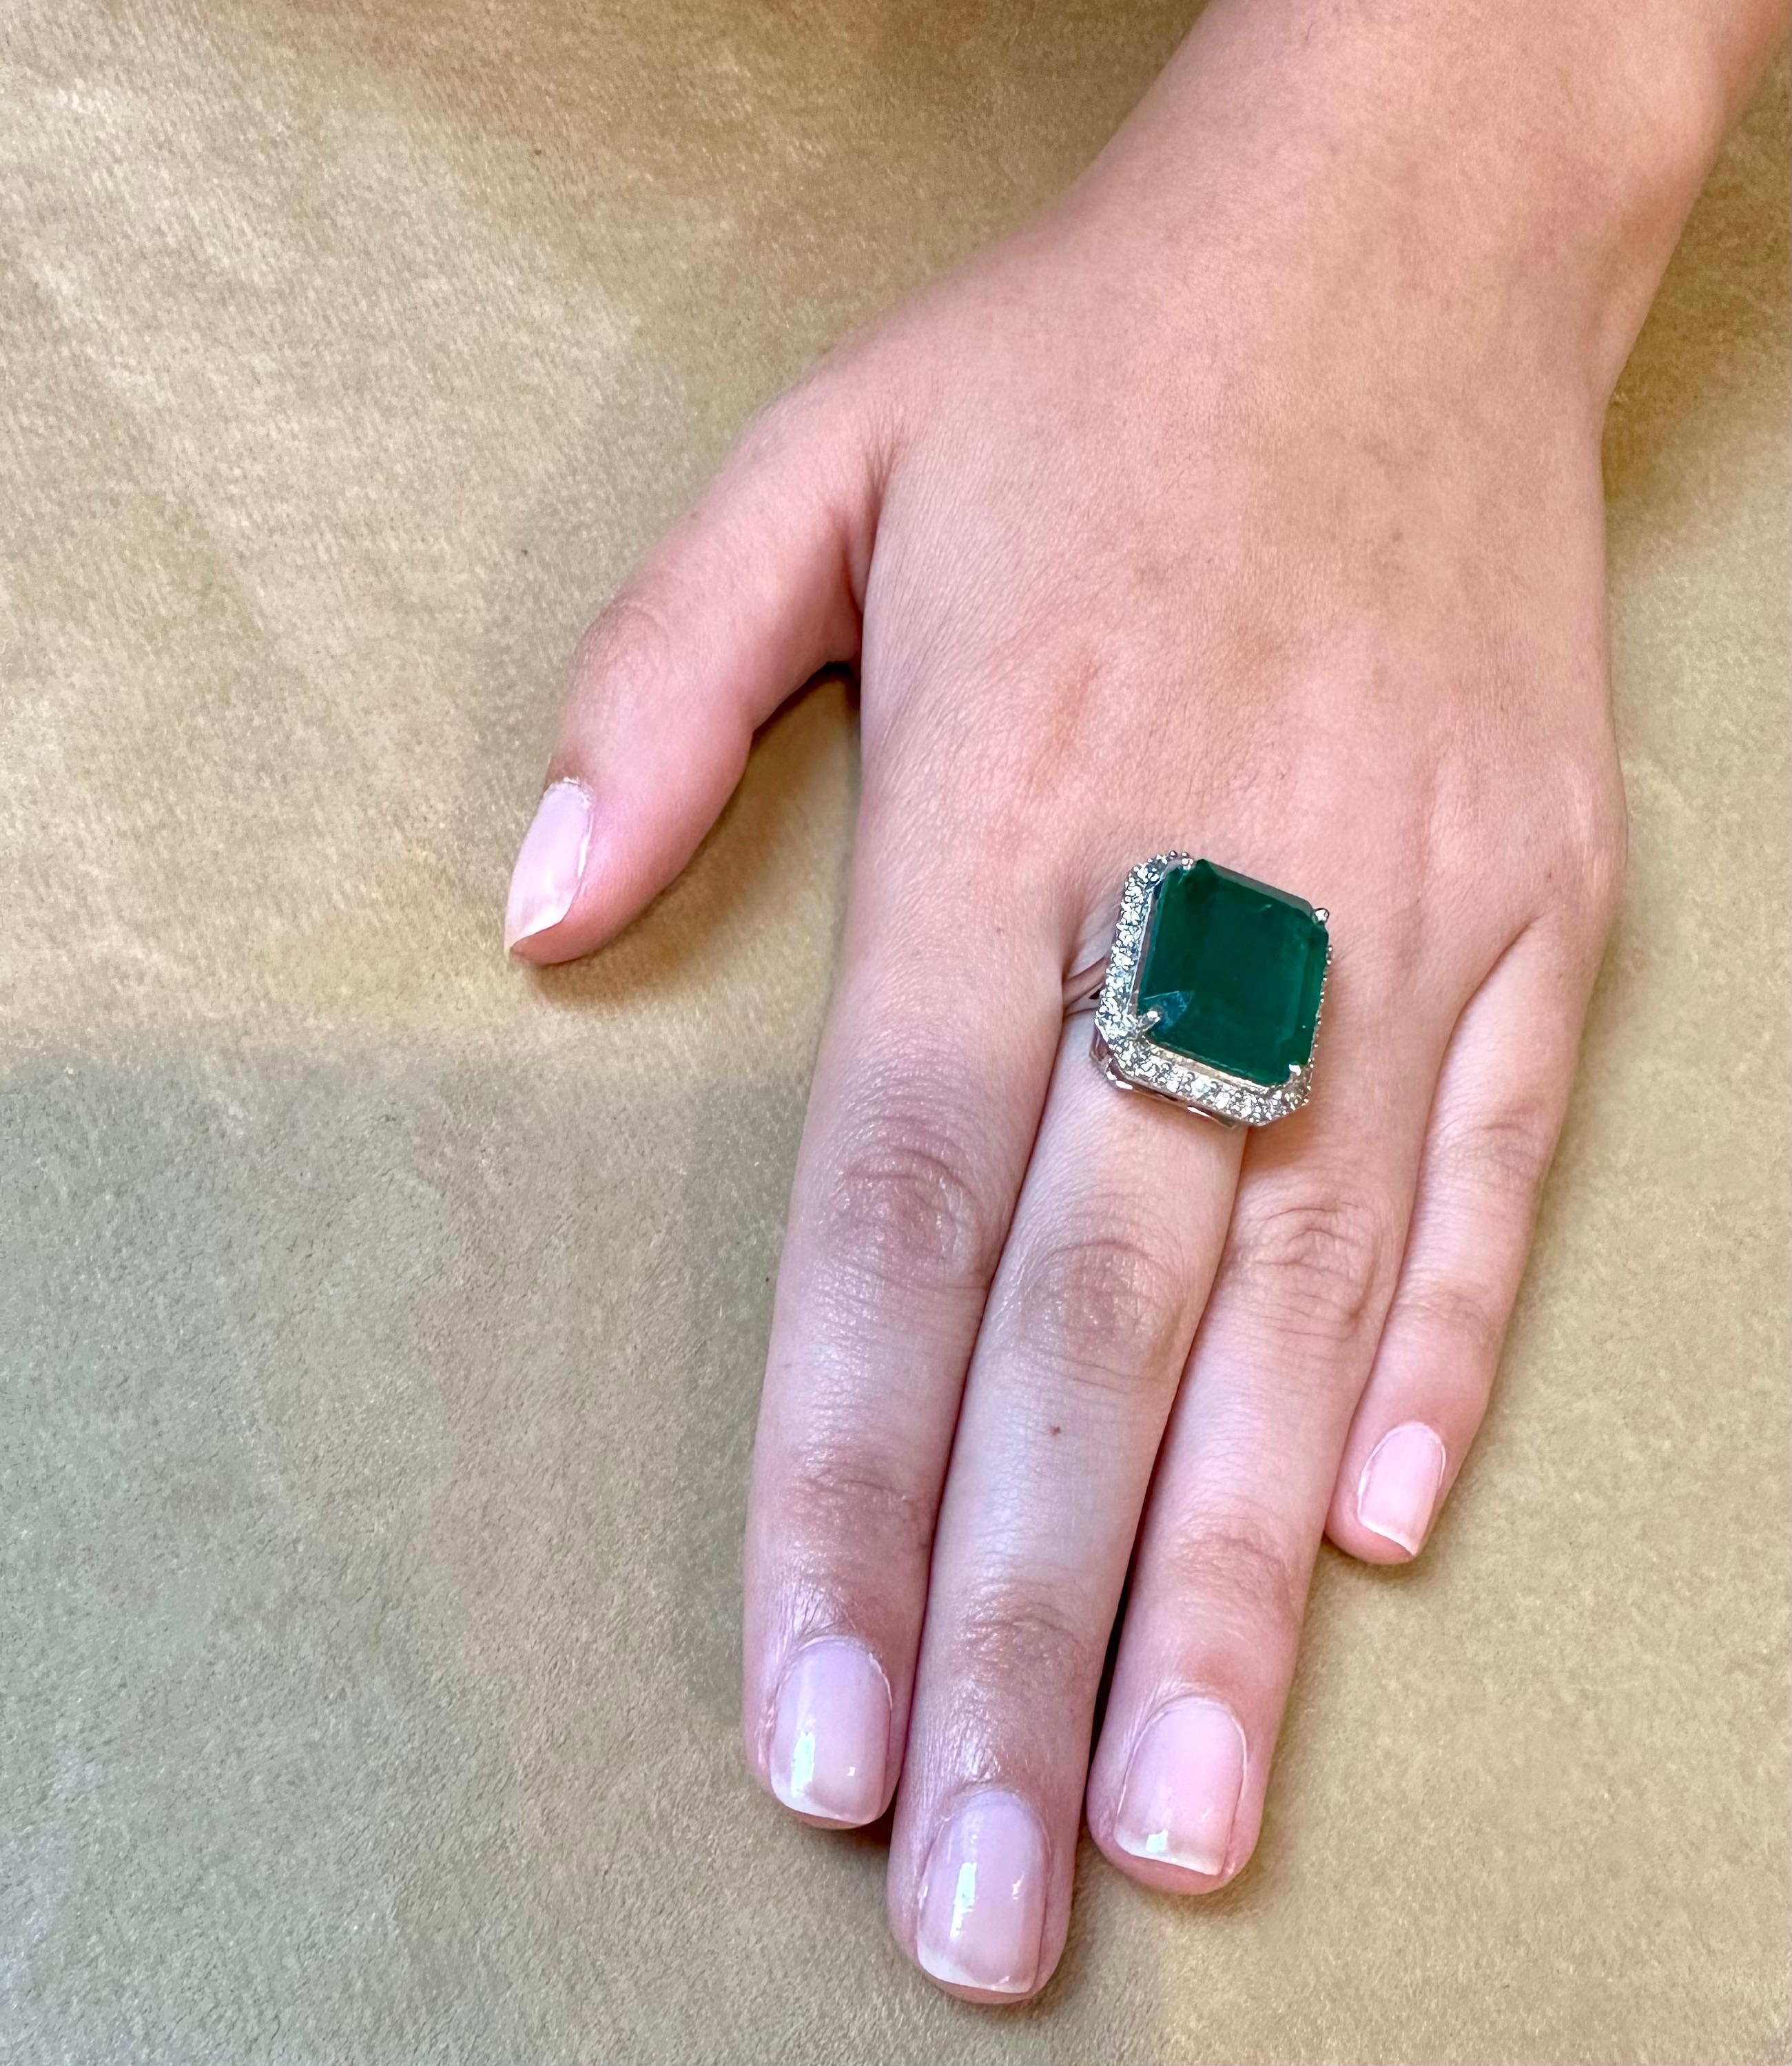 Natural 13 Carat Emerald Cut Zambian Emerald & Diamond Ring in 14kt White Gold For Sale 9